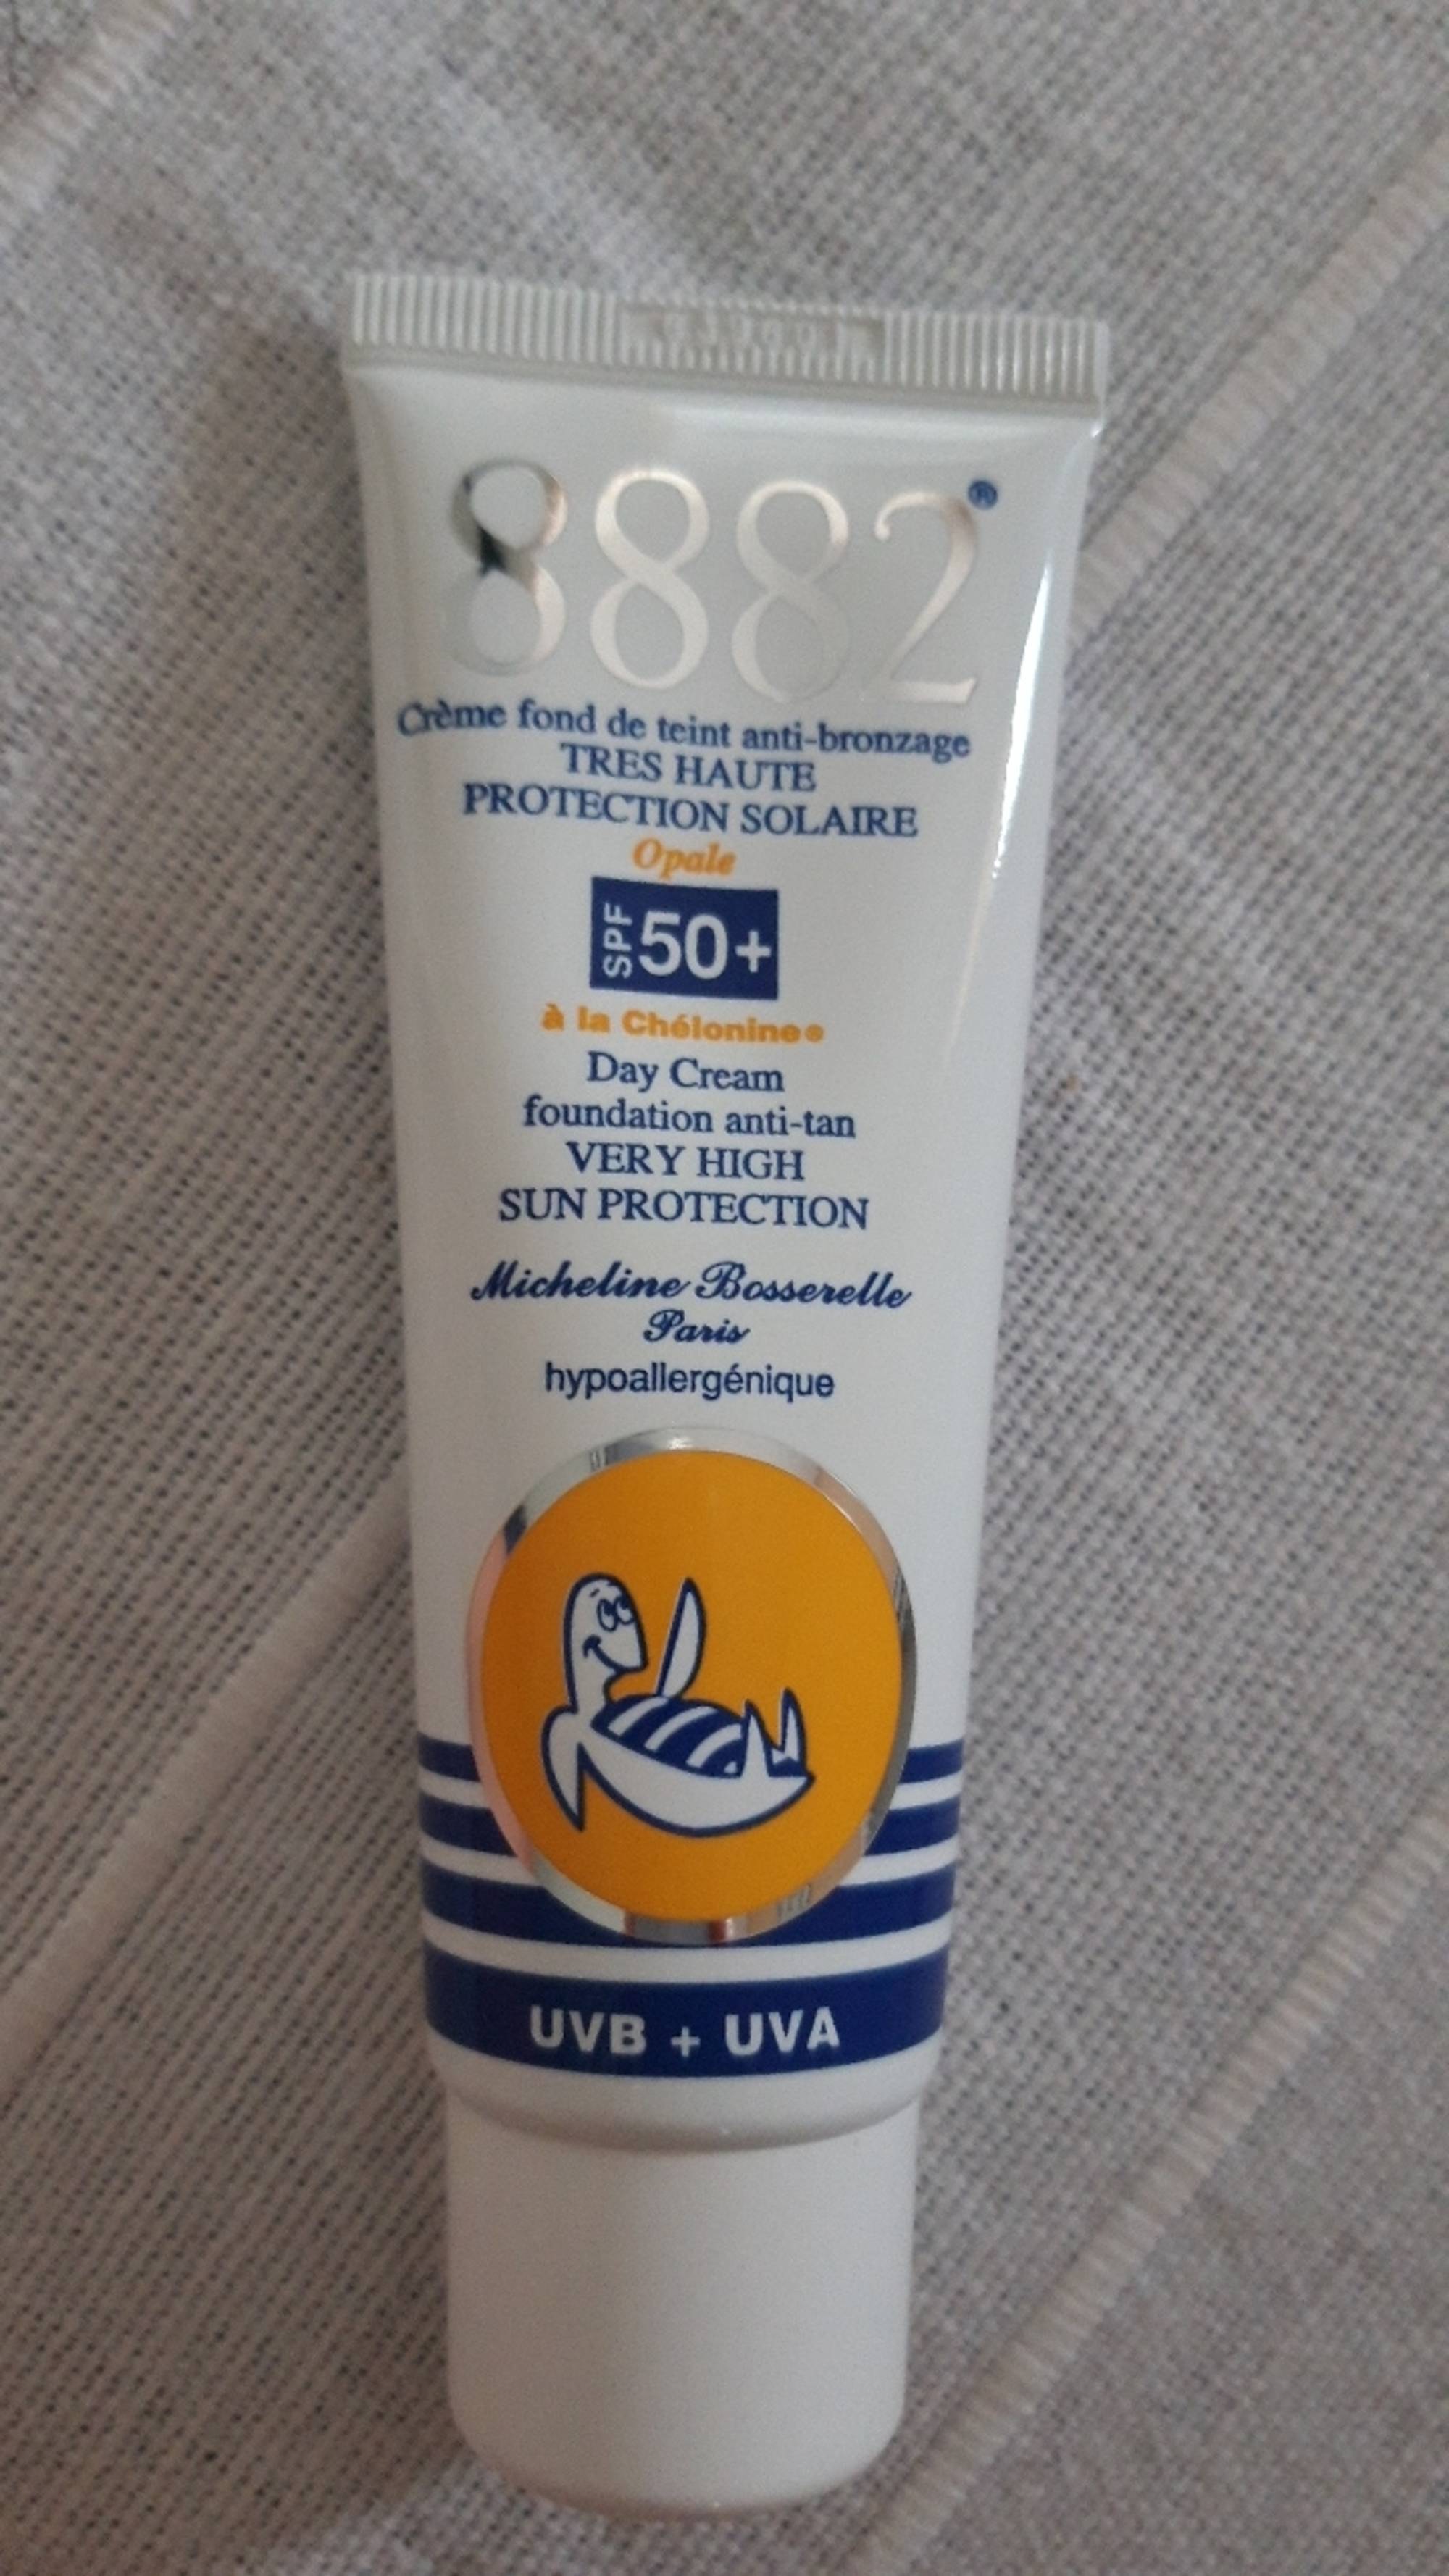 8882 - Crème fond de teint anti-bronzage SPF 50+